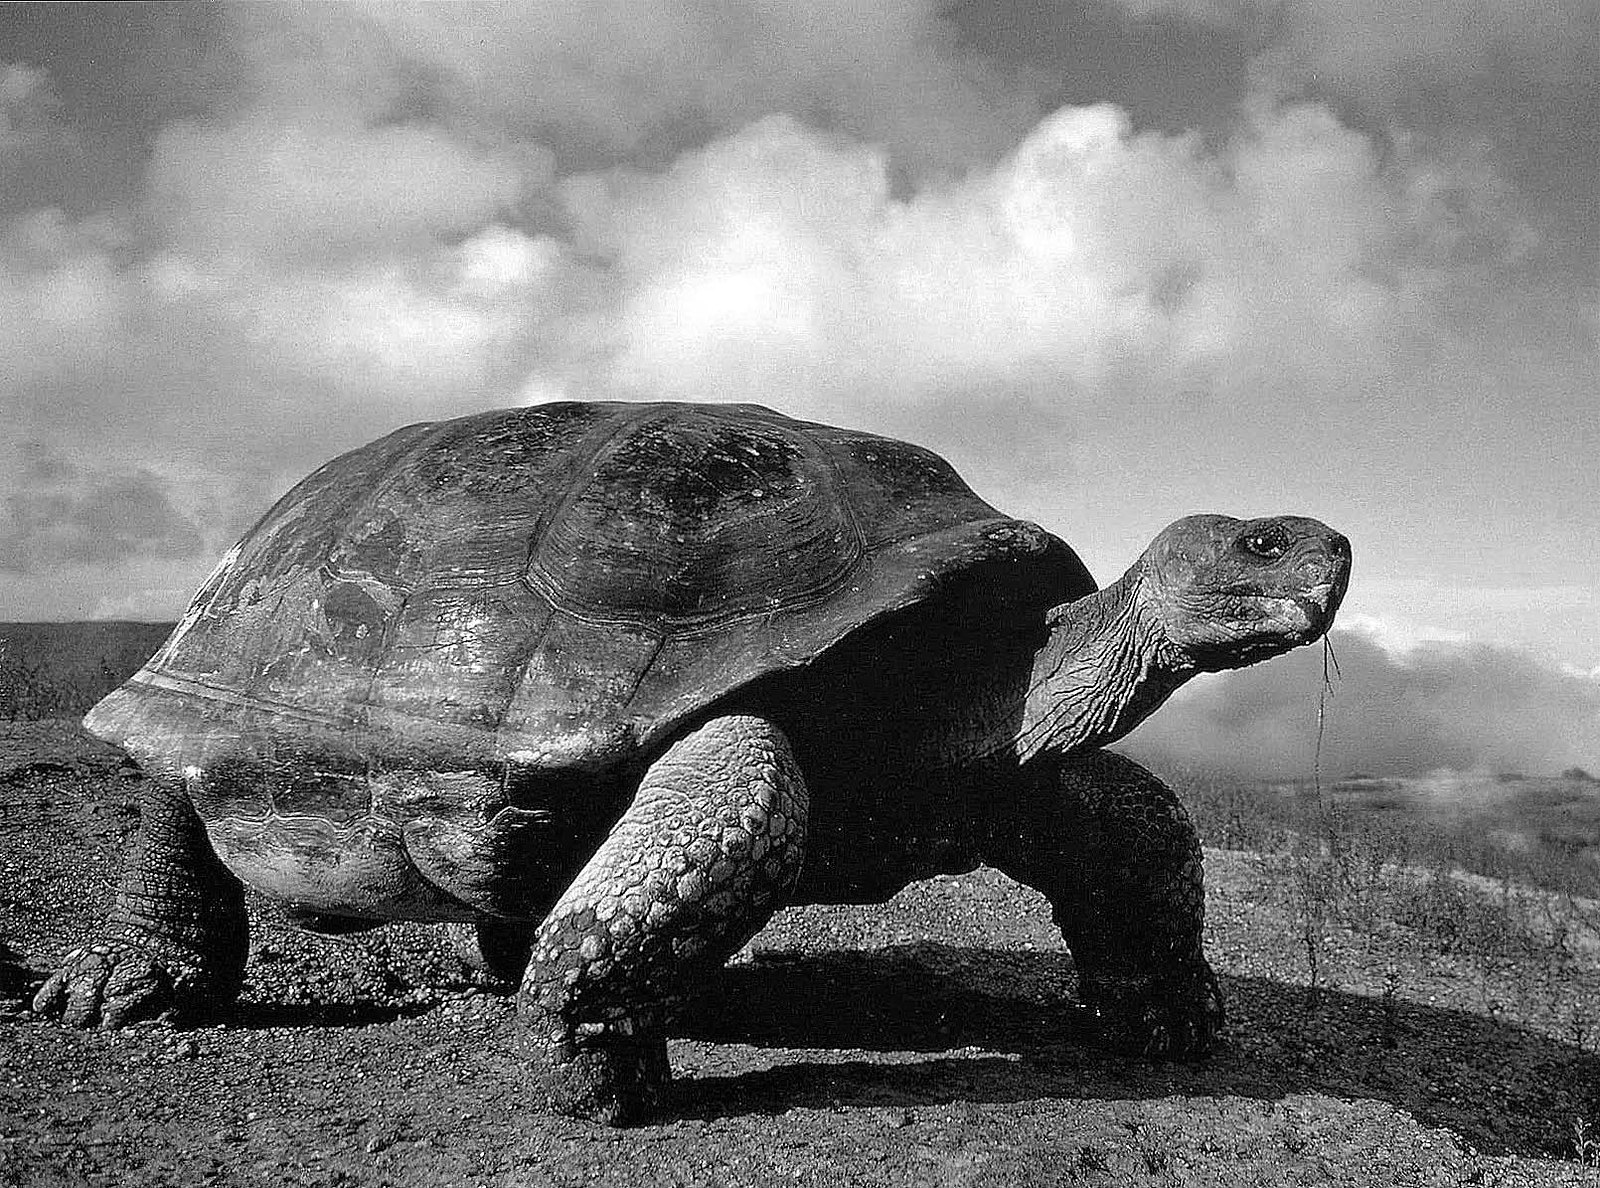 Giant Tortoise, Charles Darwin Research Center, Santa Cruz Island, Galapagos Islands, Ecuador